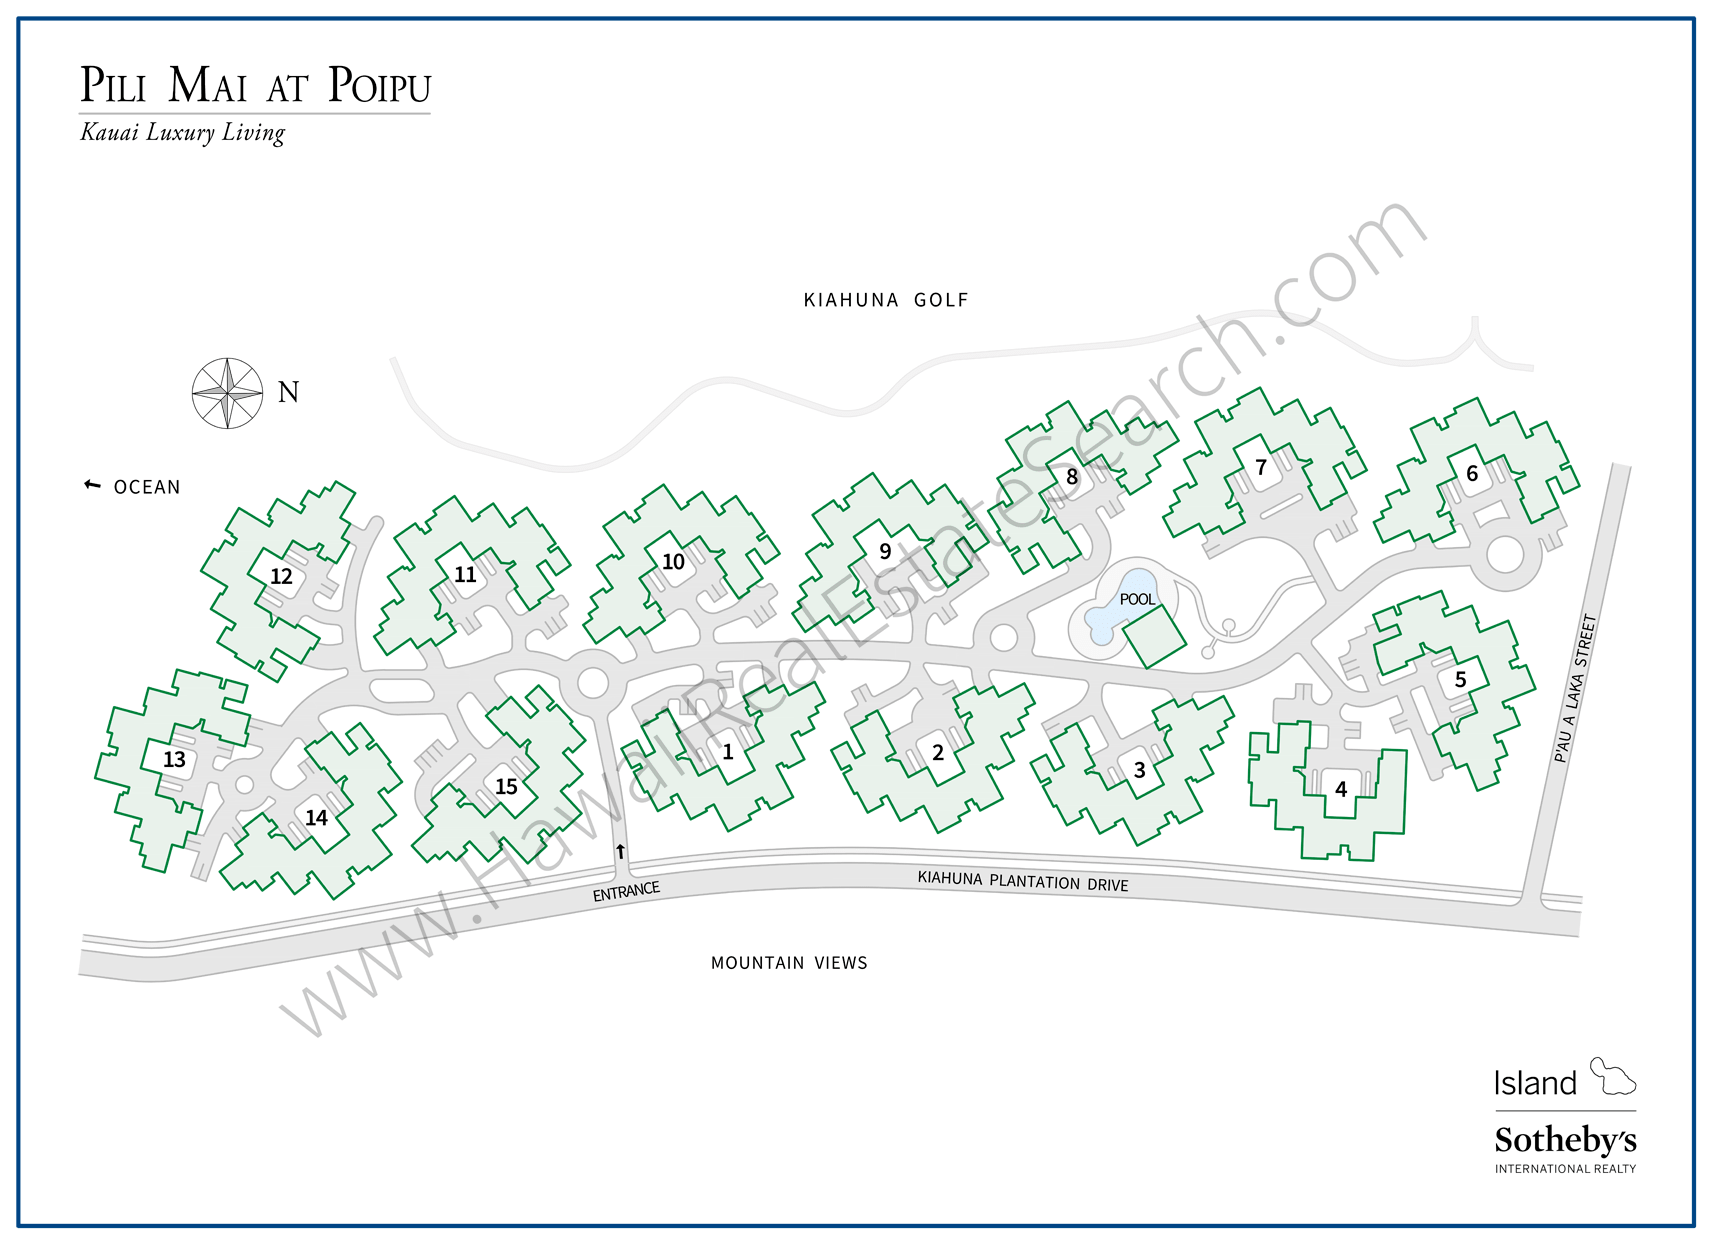 Pili Mai at Poipu Map